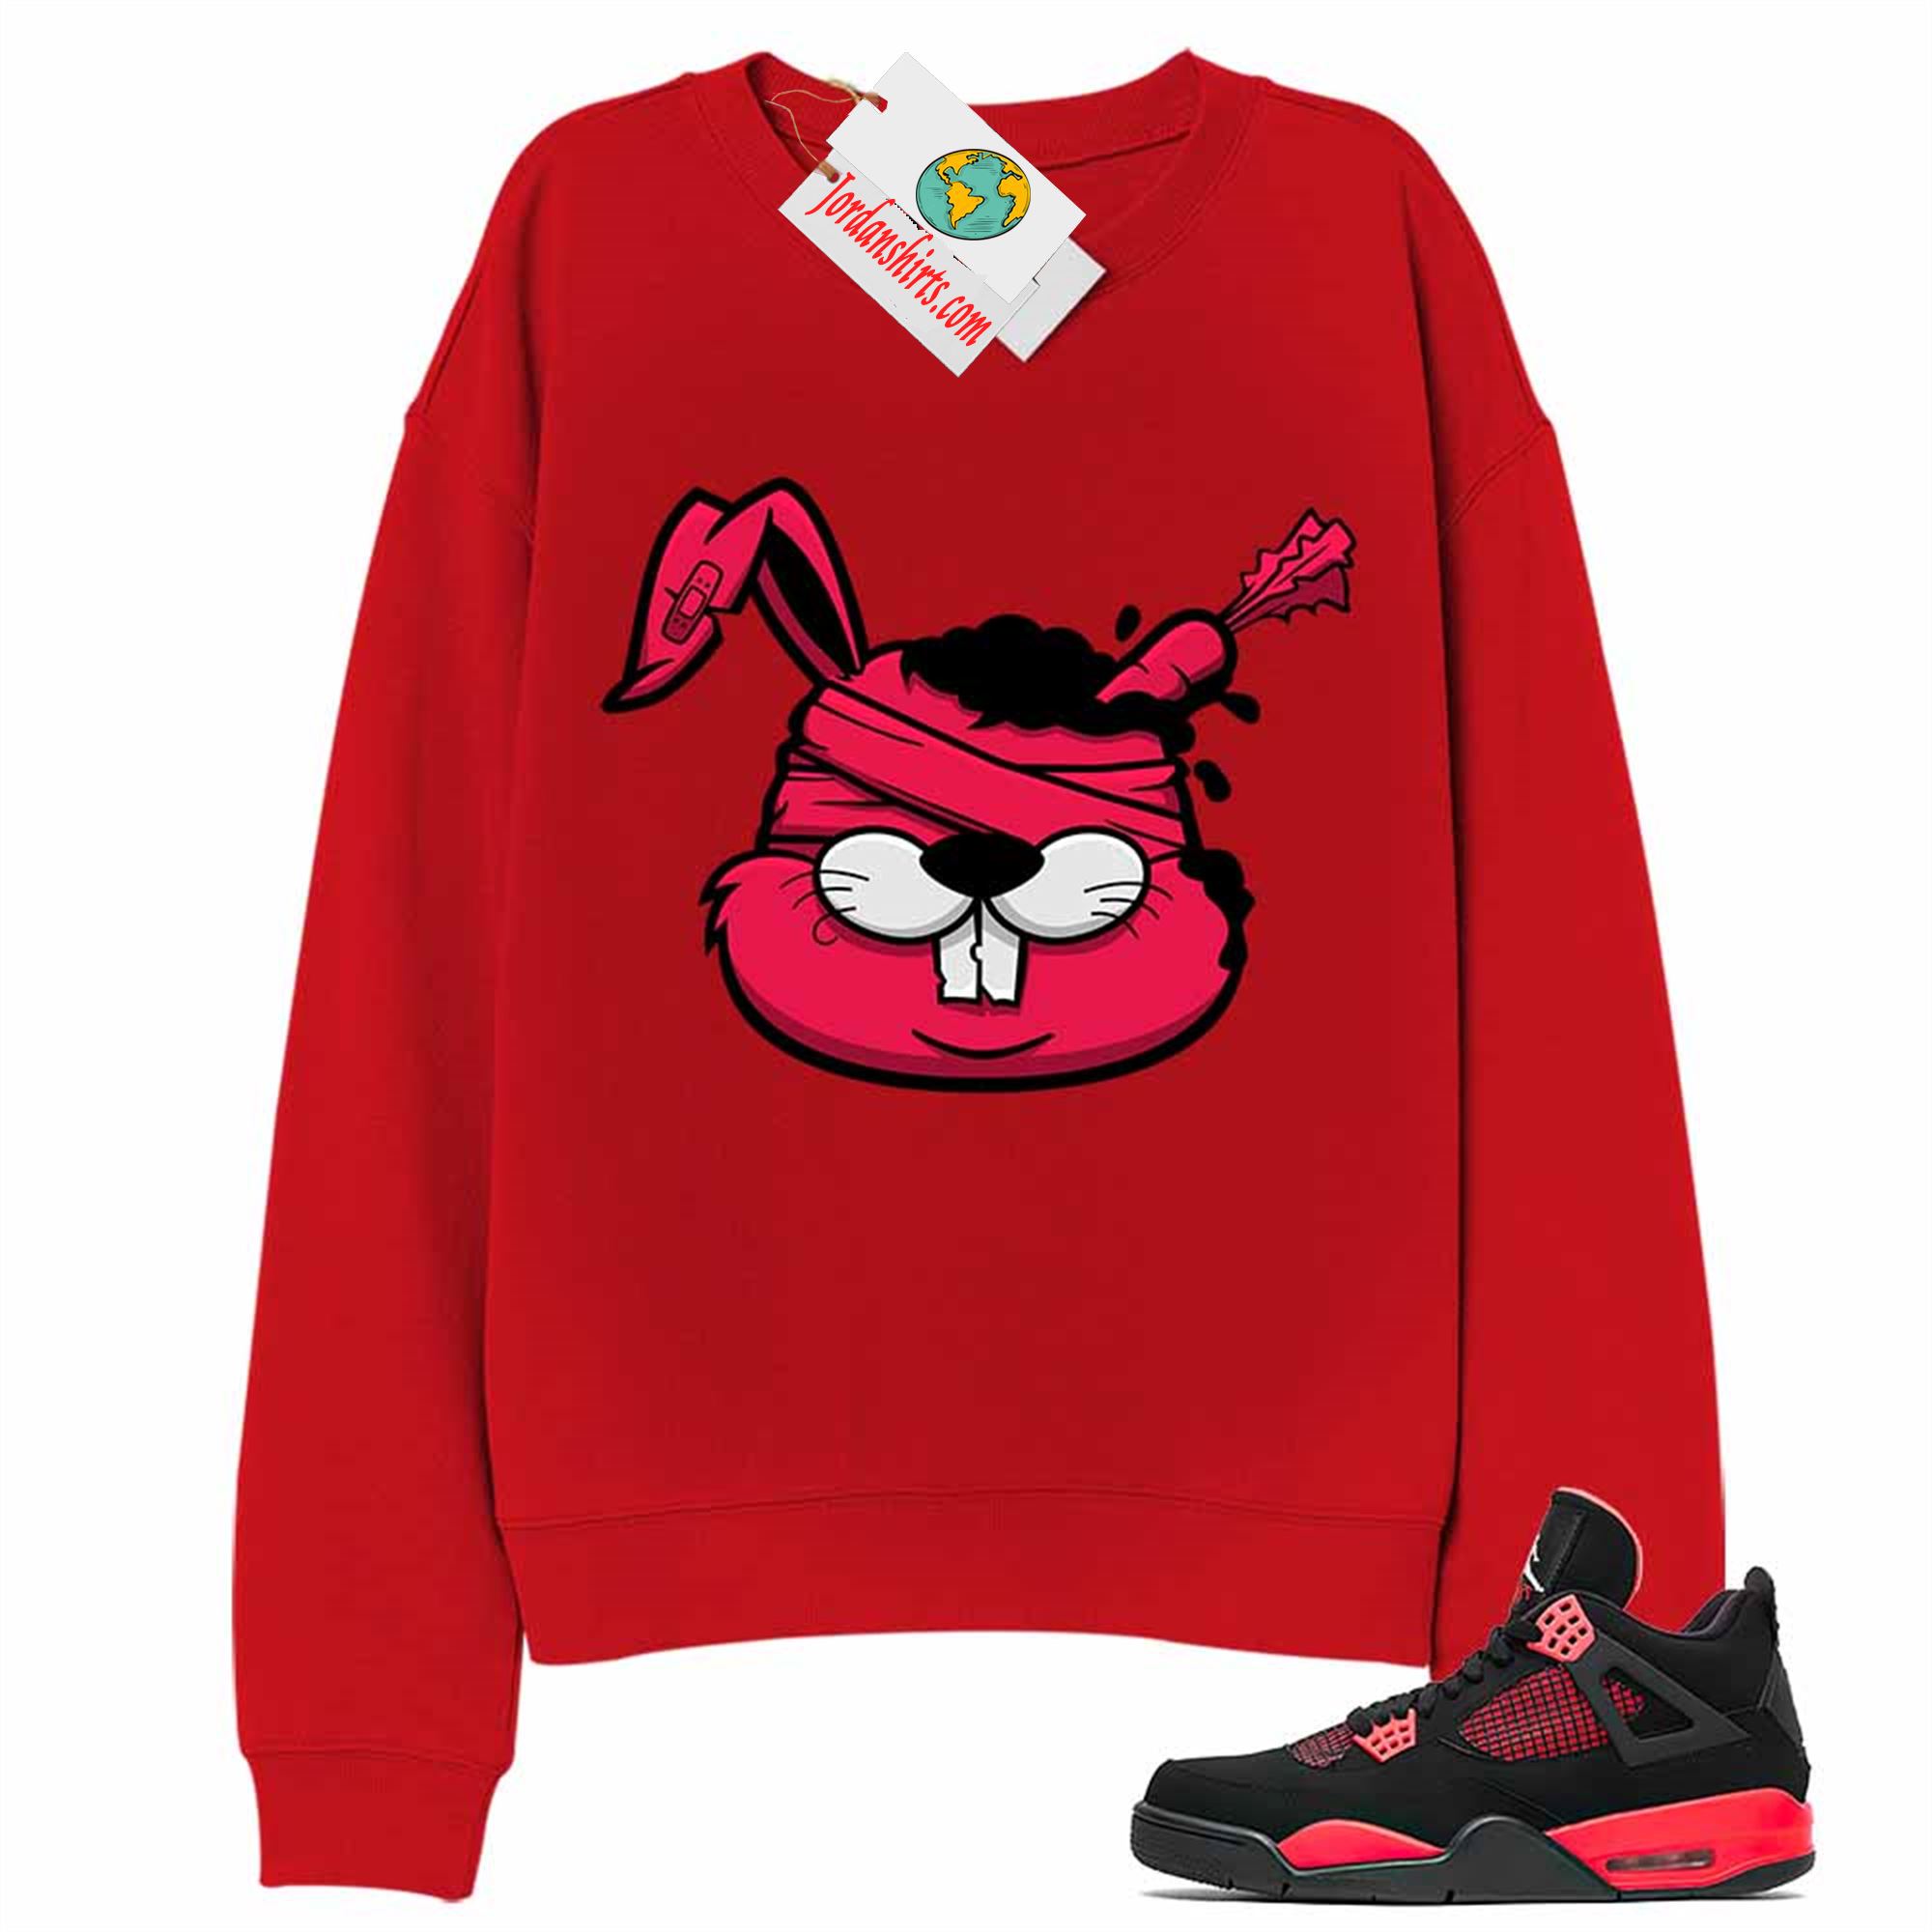 Jordan 4 Sweatshirt, Zombie Bunny Red Sweatshirt Air Jordan 4 Red Thunder 4s Full Size Up To 5xl